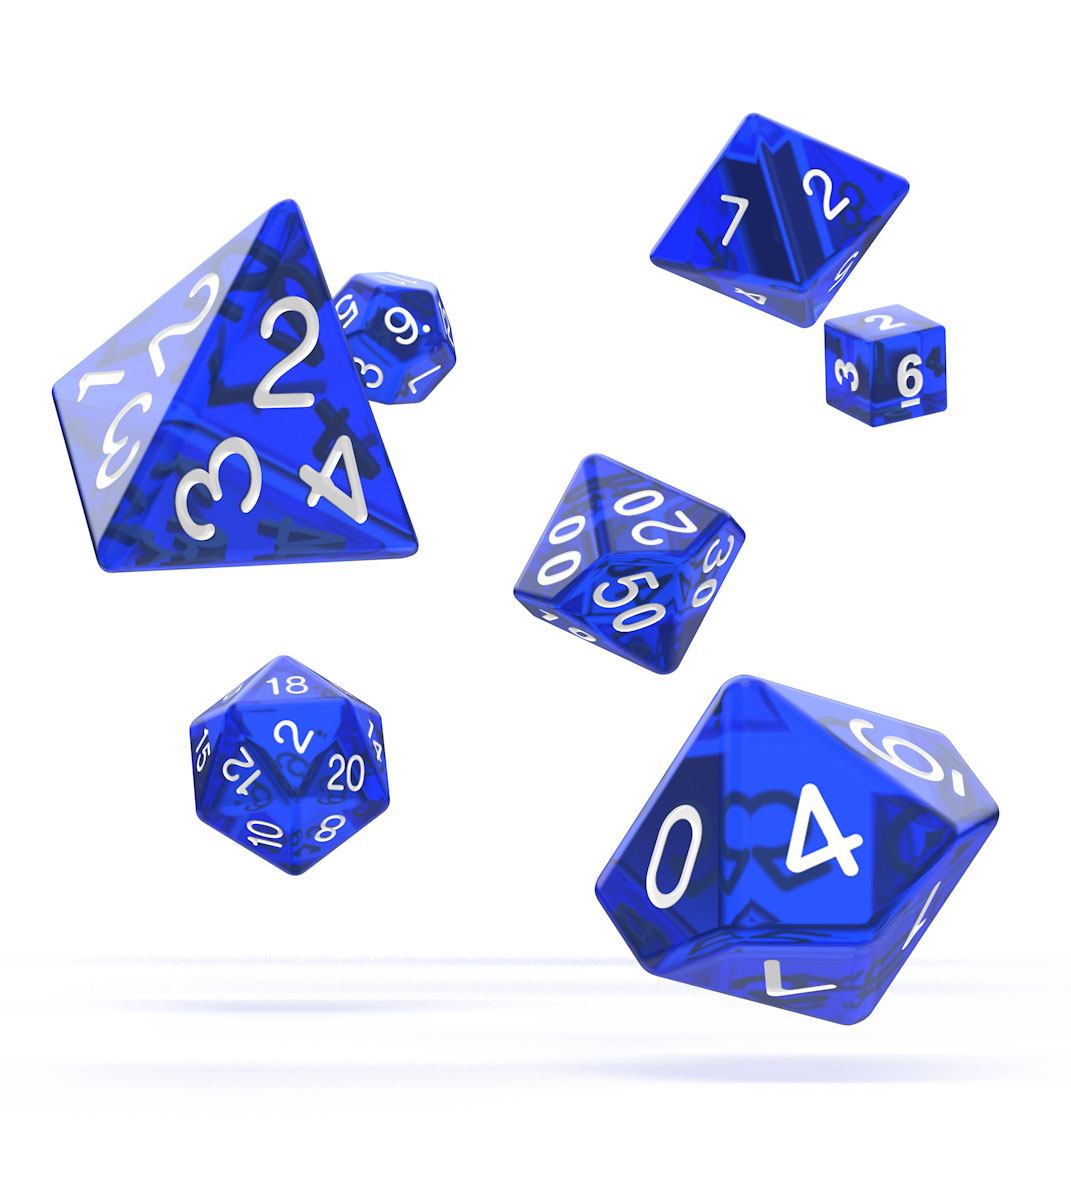 Kocka Set (7) - Oakie Doakie Dice RPG Set Translucent - Blue